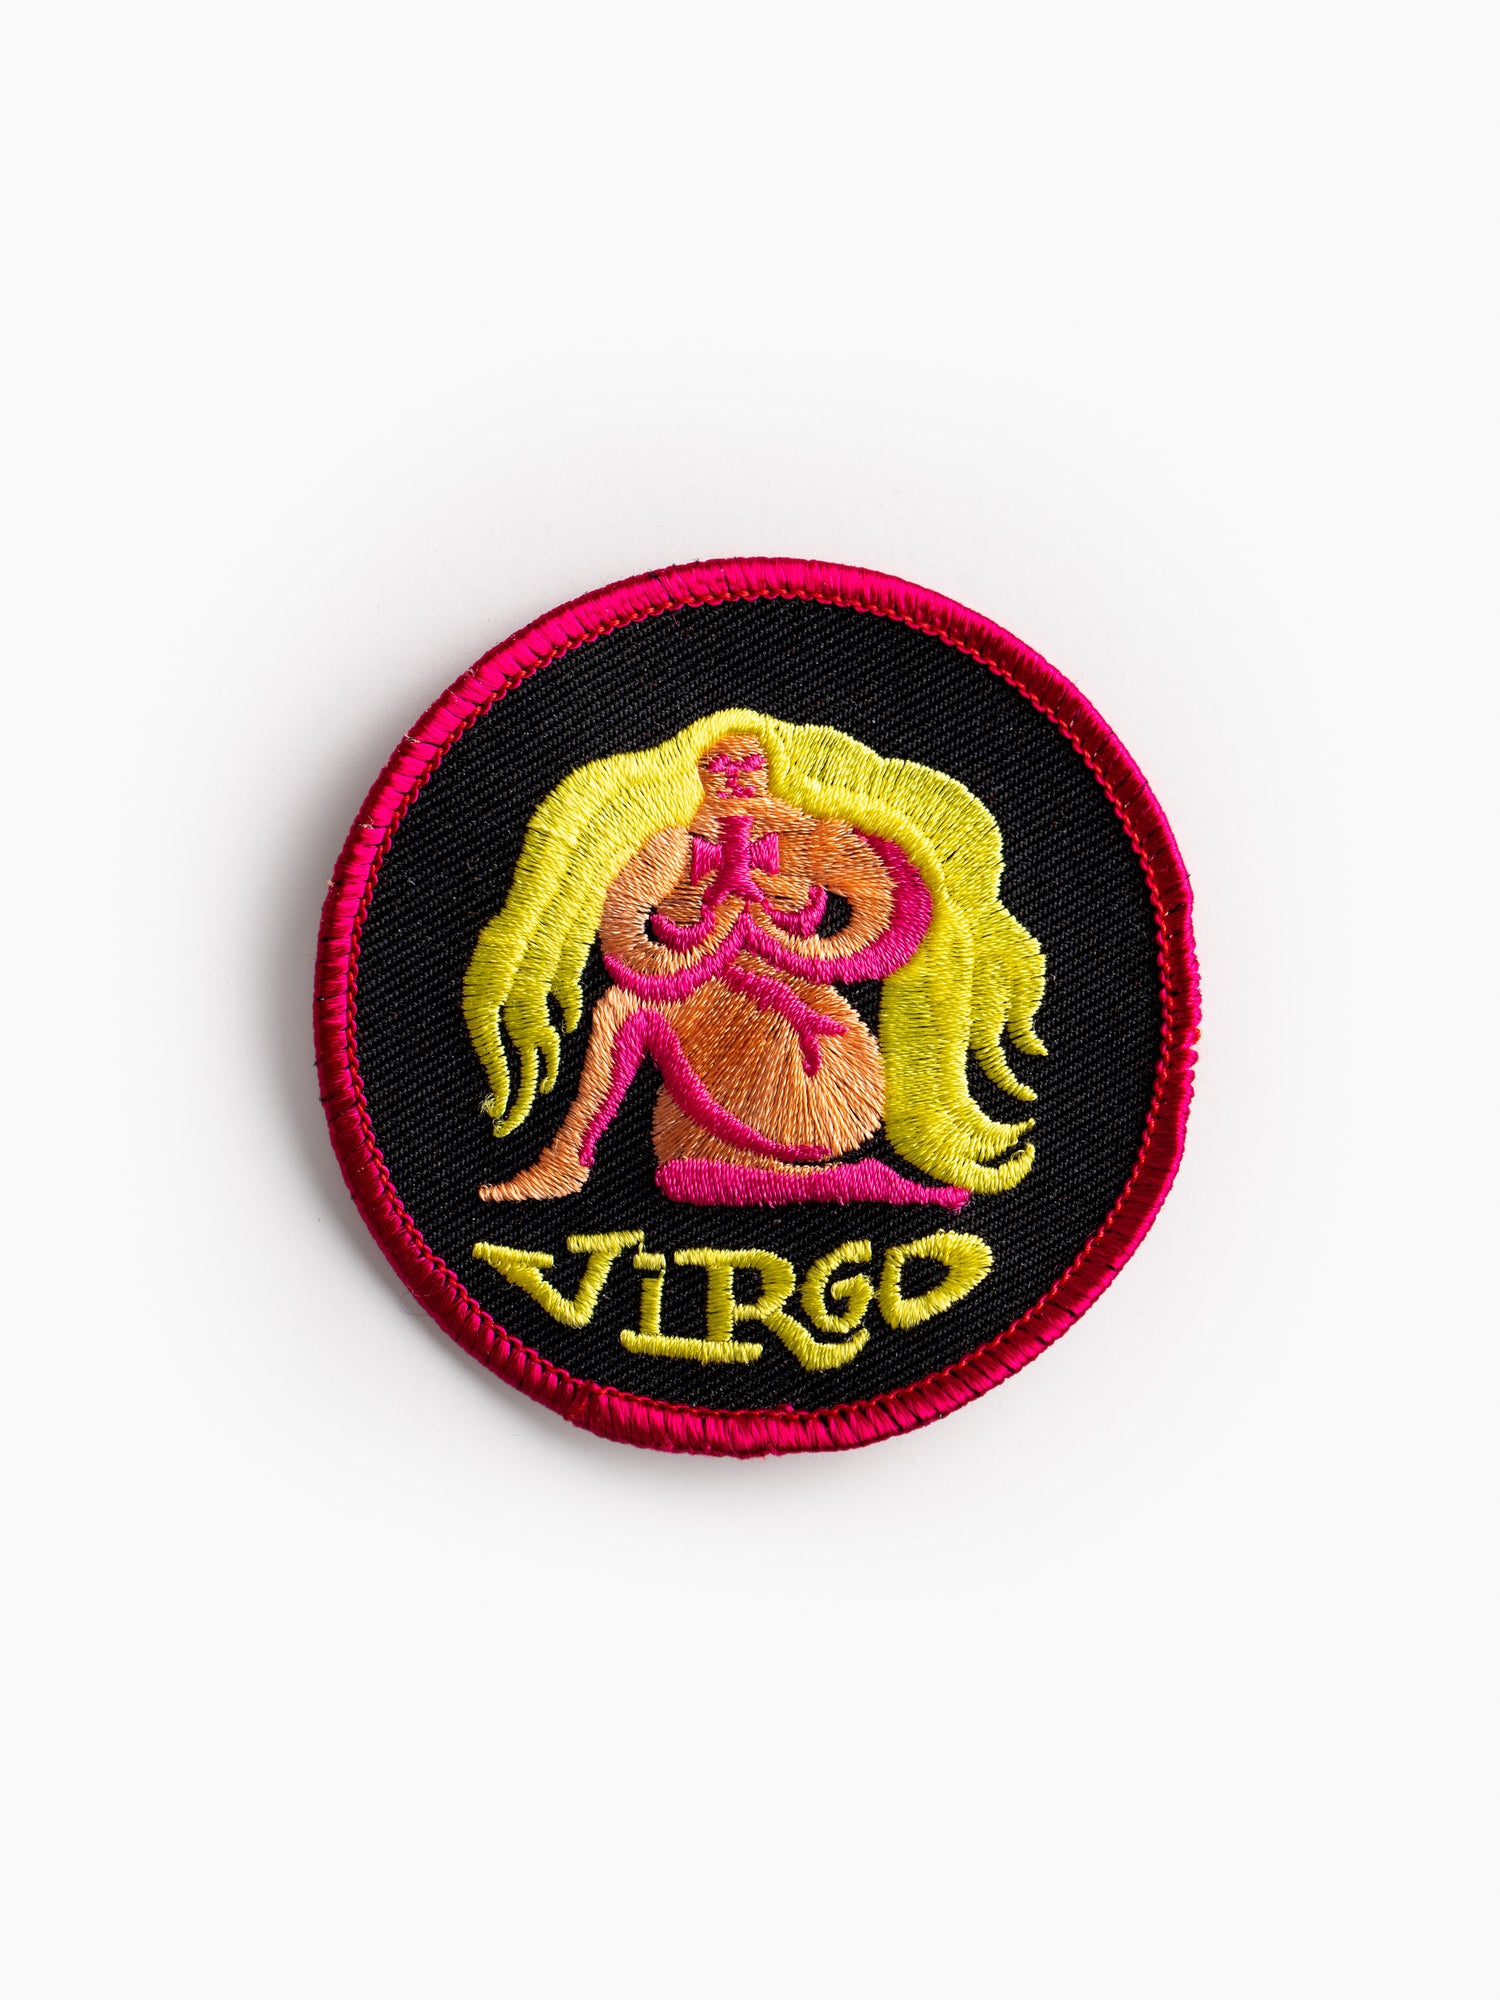 Virgo Zodiac Patch for Tactical Gear